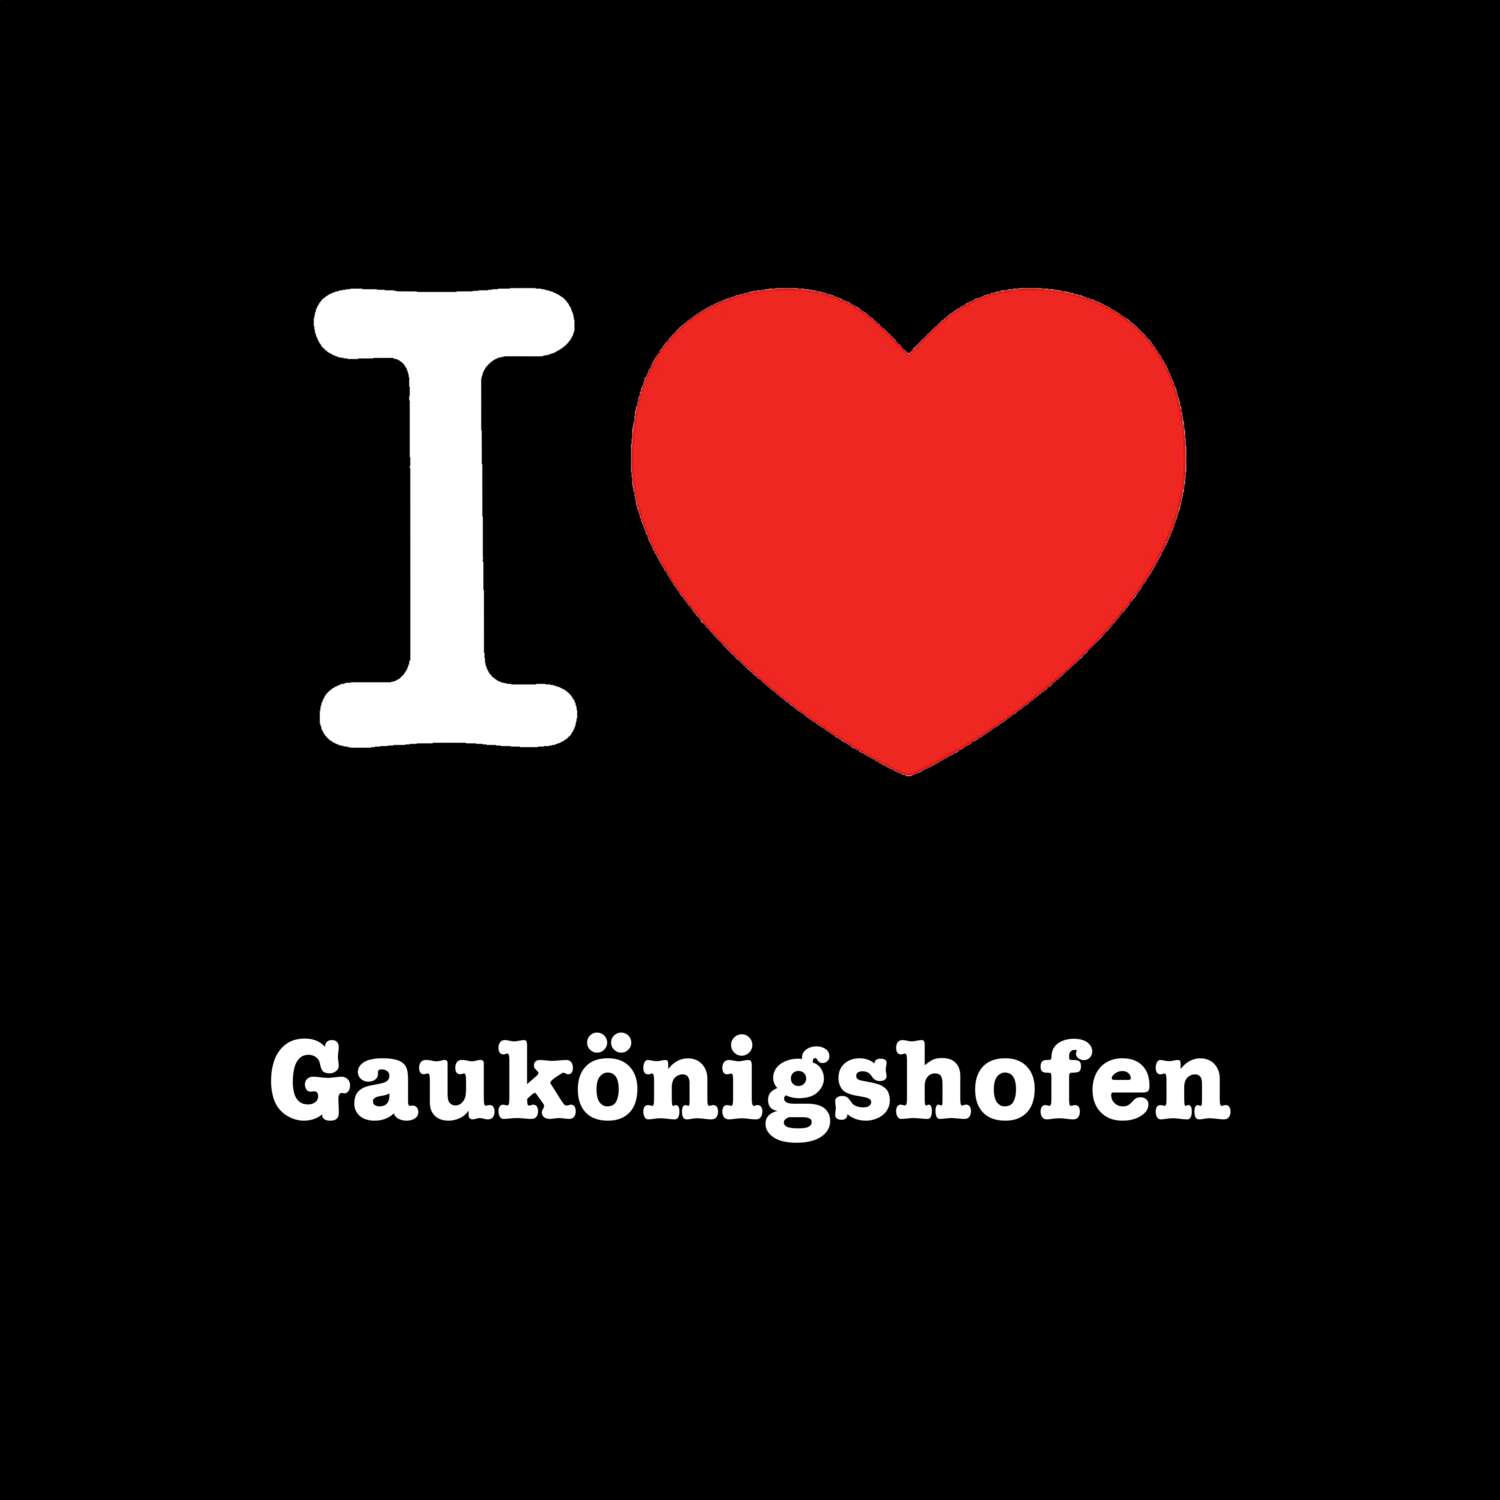 Gaukönigshofen T-Shirt »I love«